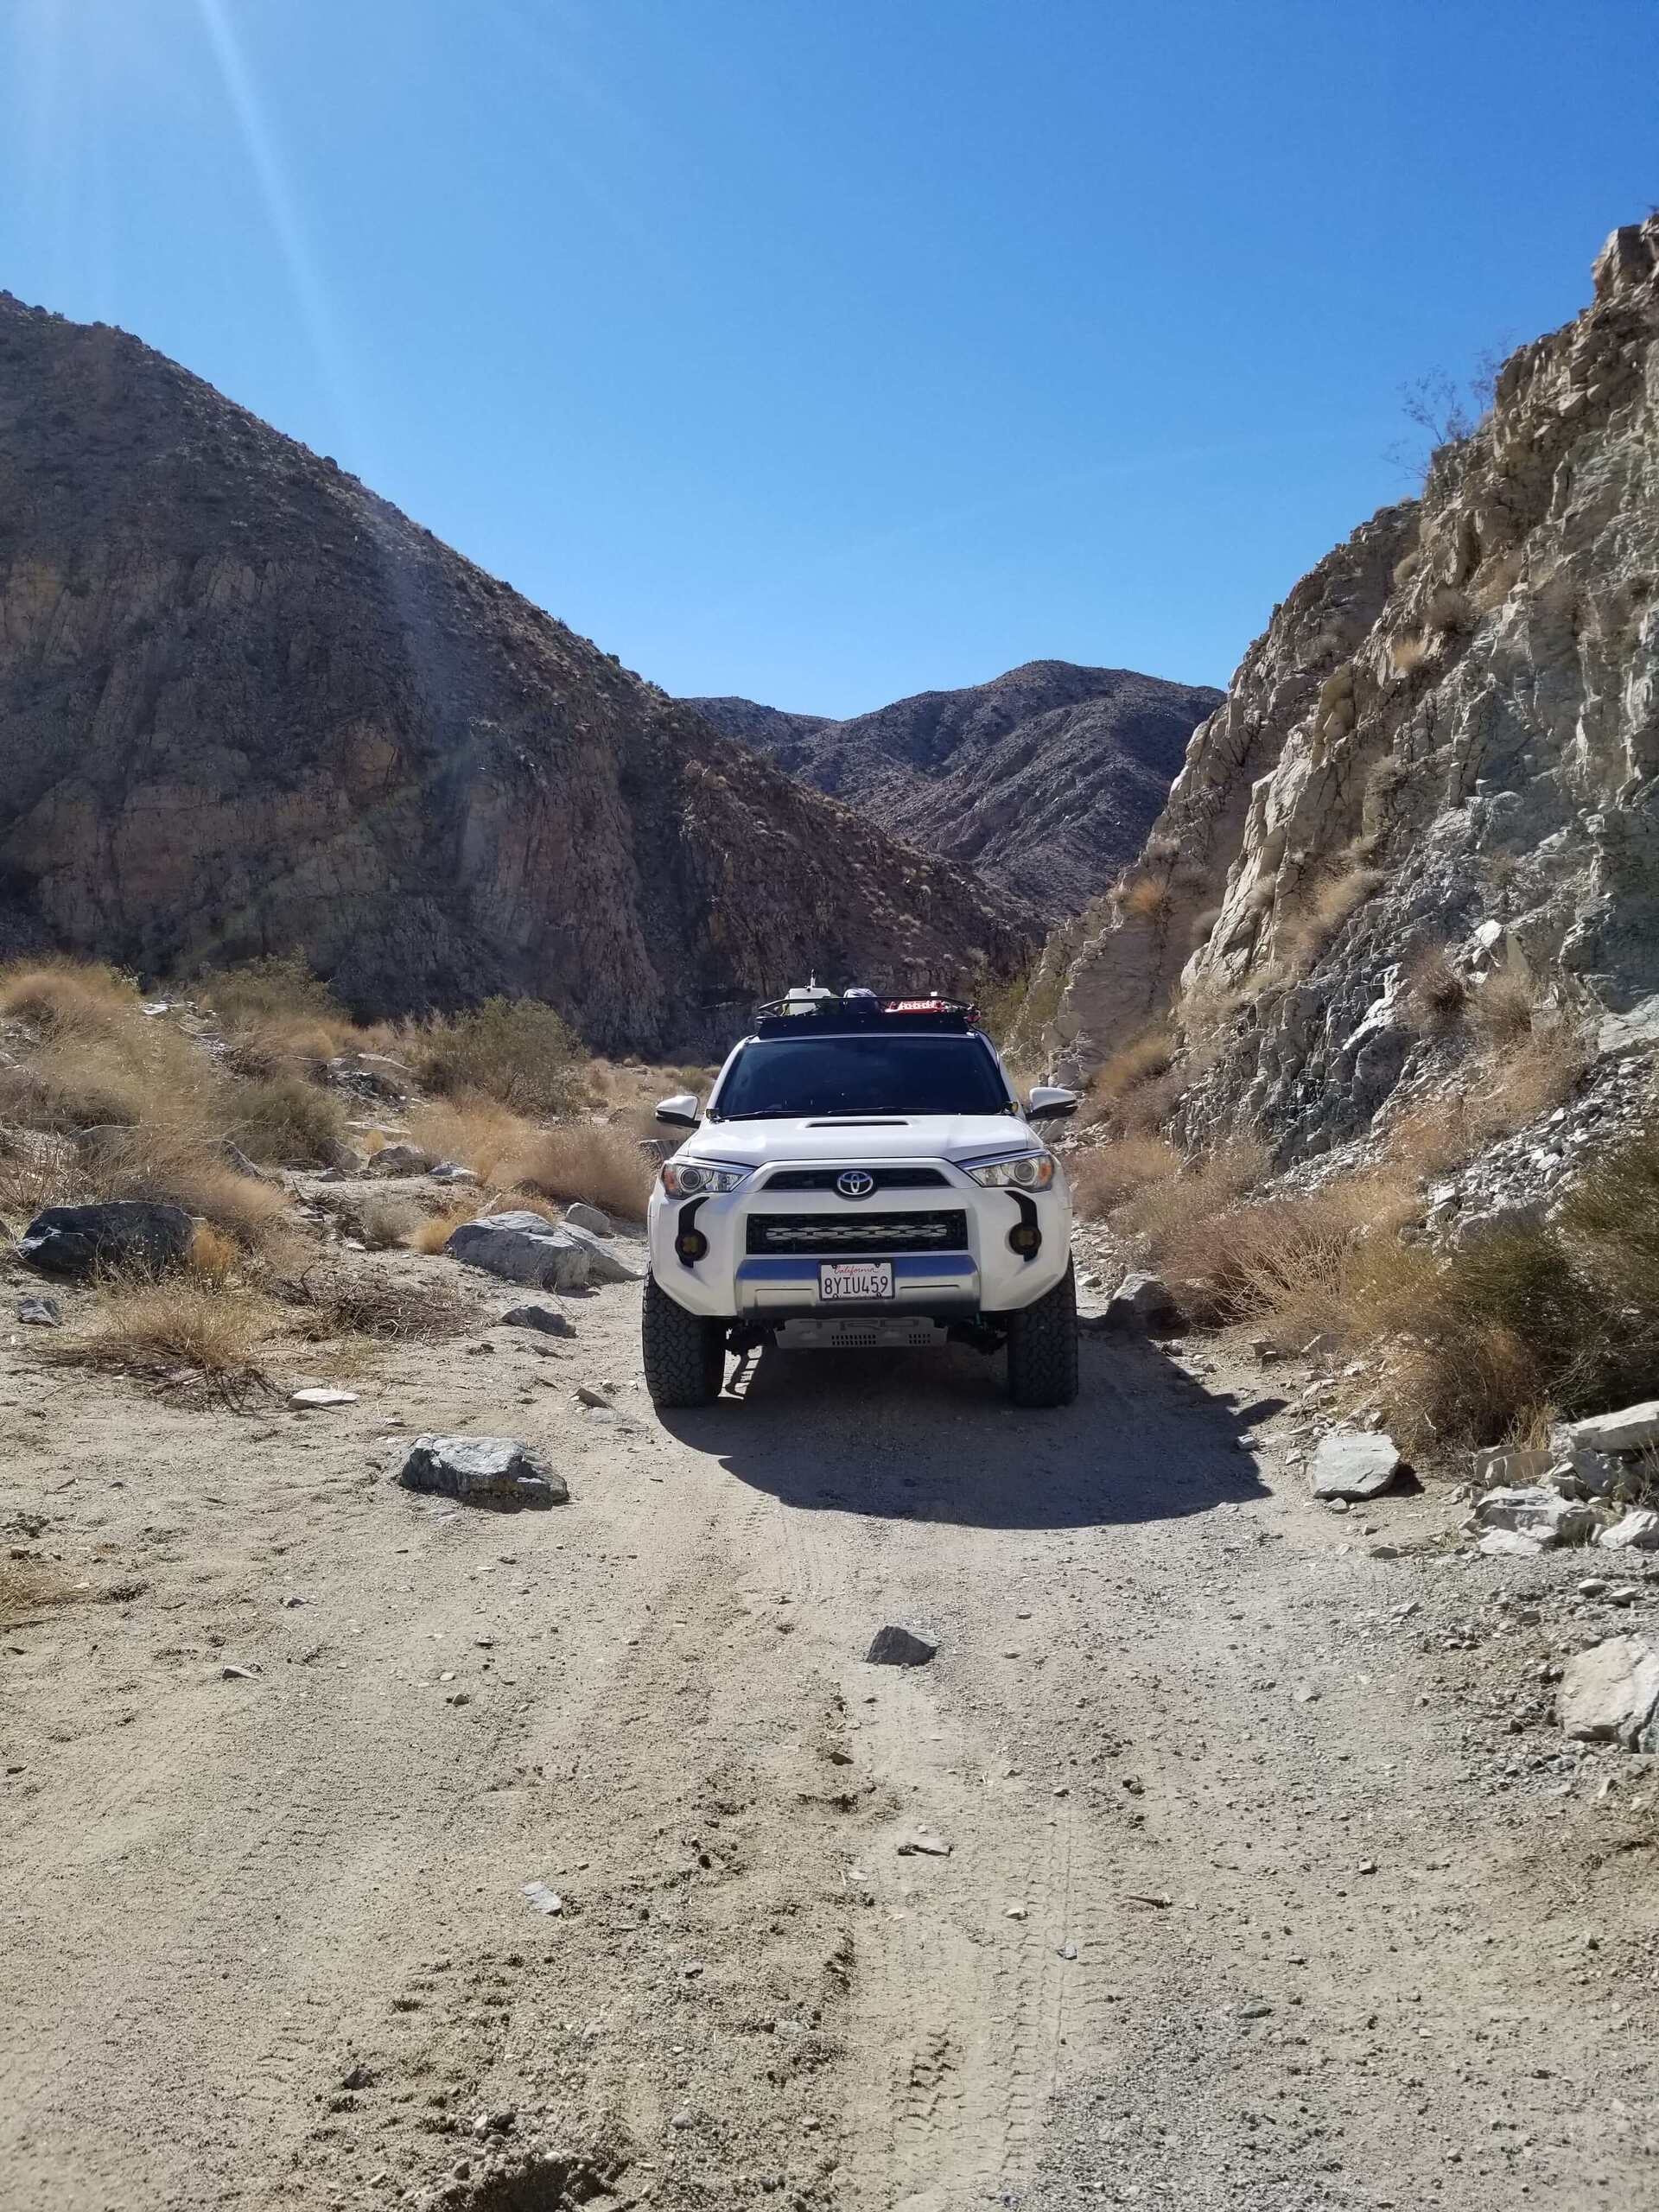 White Toyota 4runner offroad in desert canyon near Joshua Tree National Park, CA